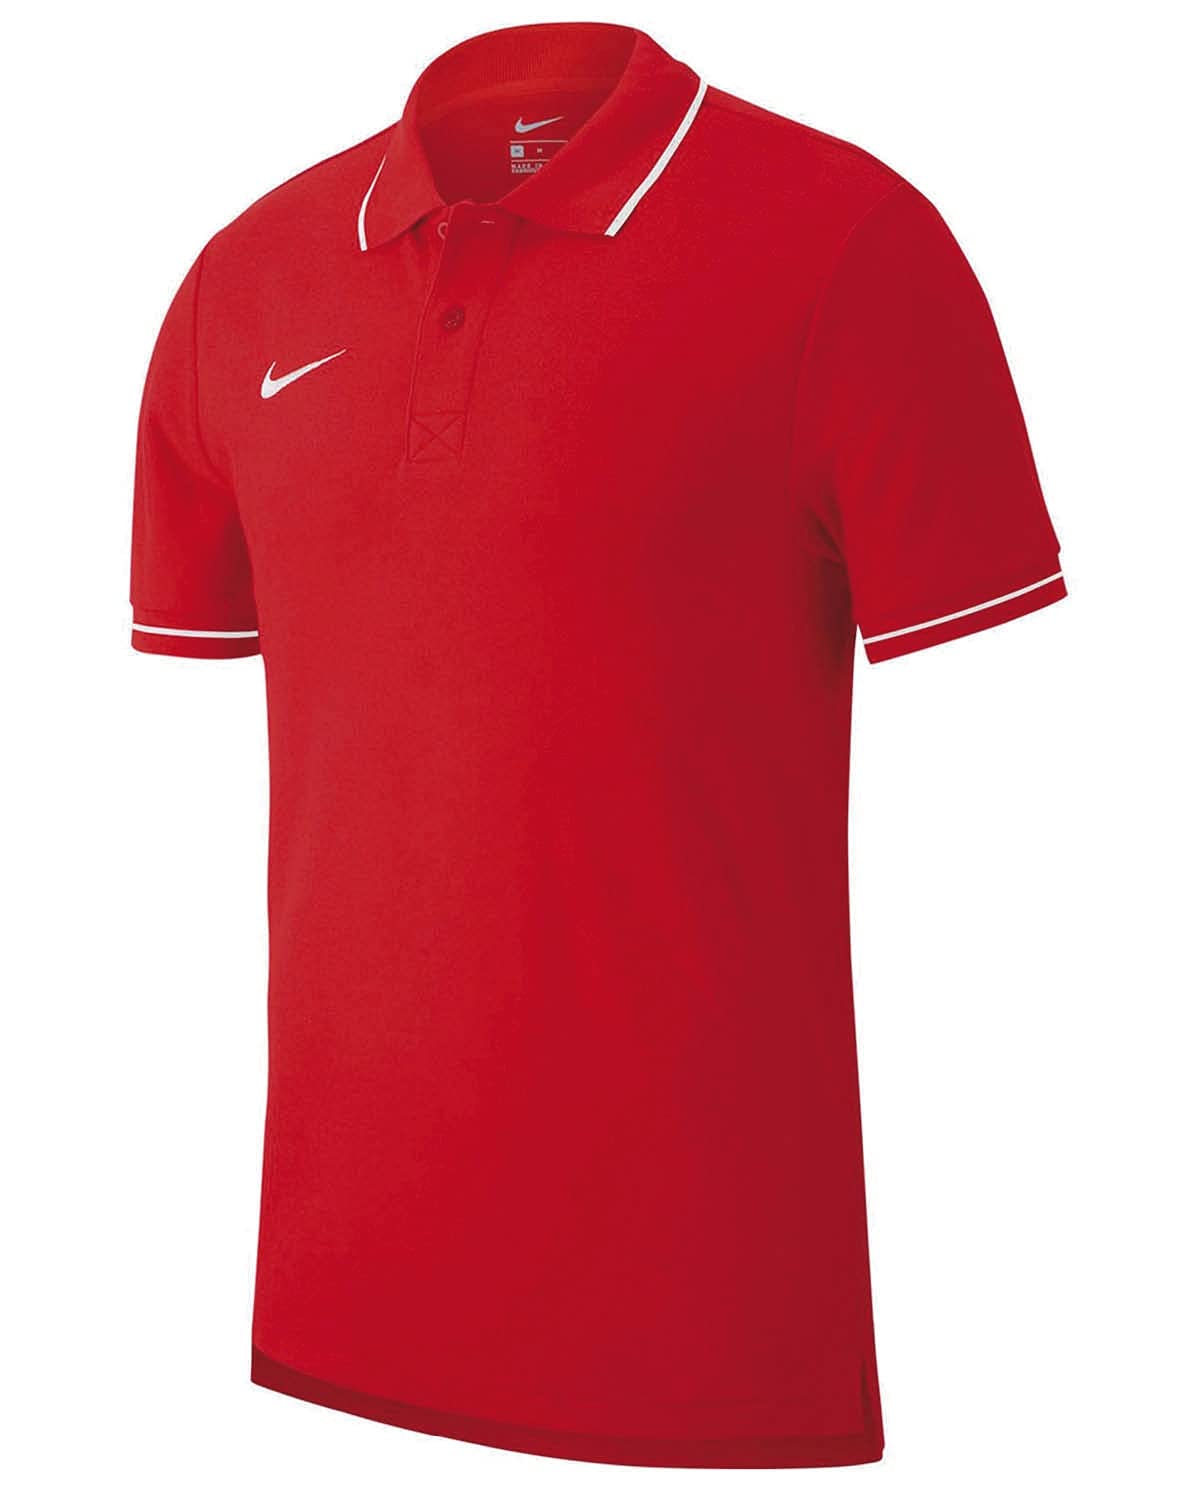 Nike Herren M TM CLUB19 SS Polo Shirt, Rot (University Red/White/657), S